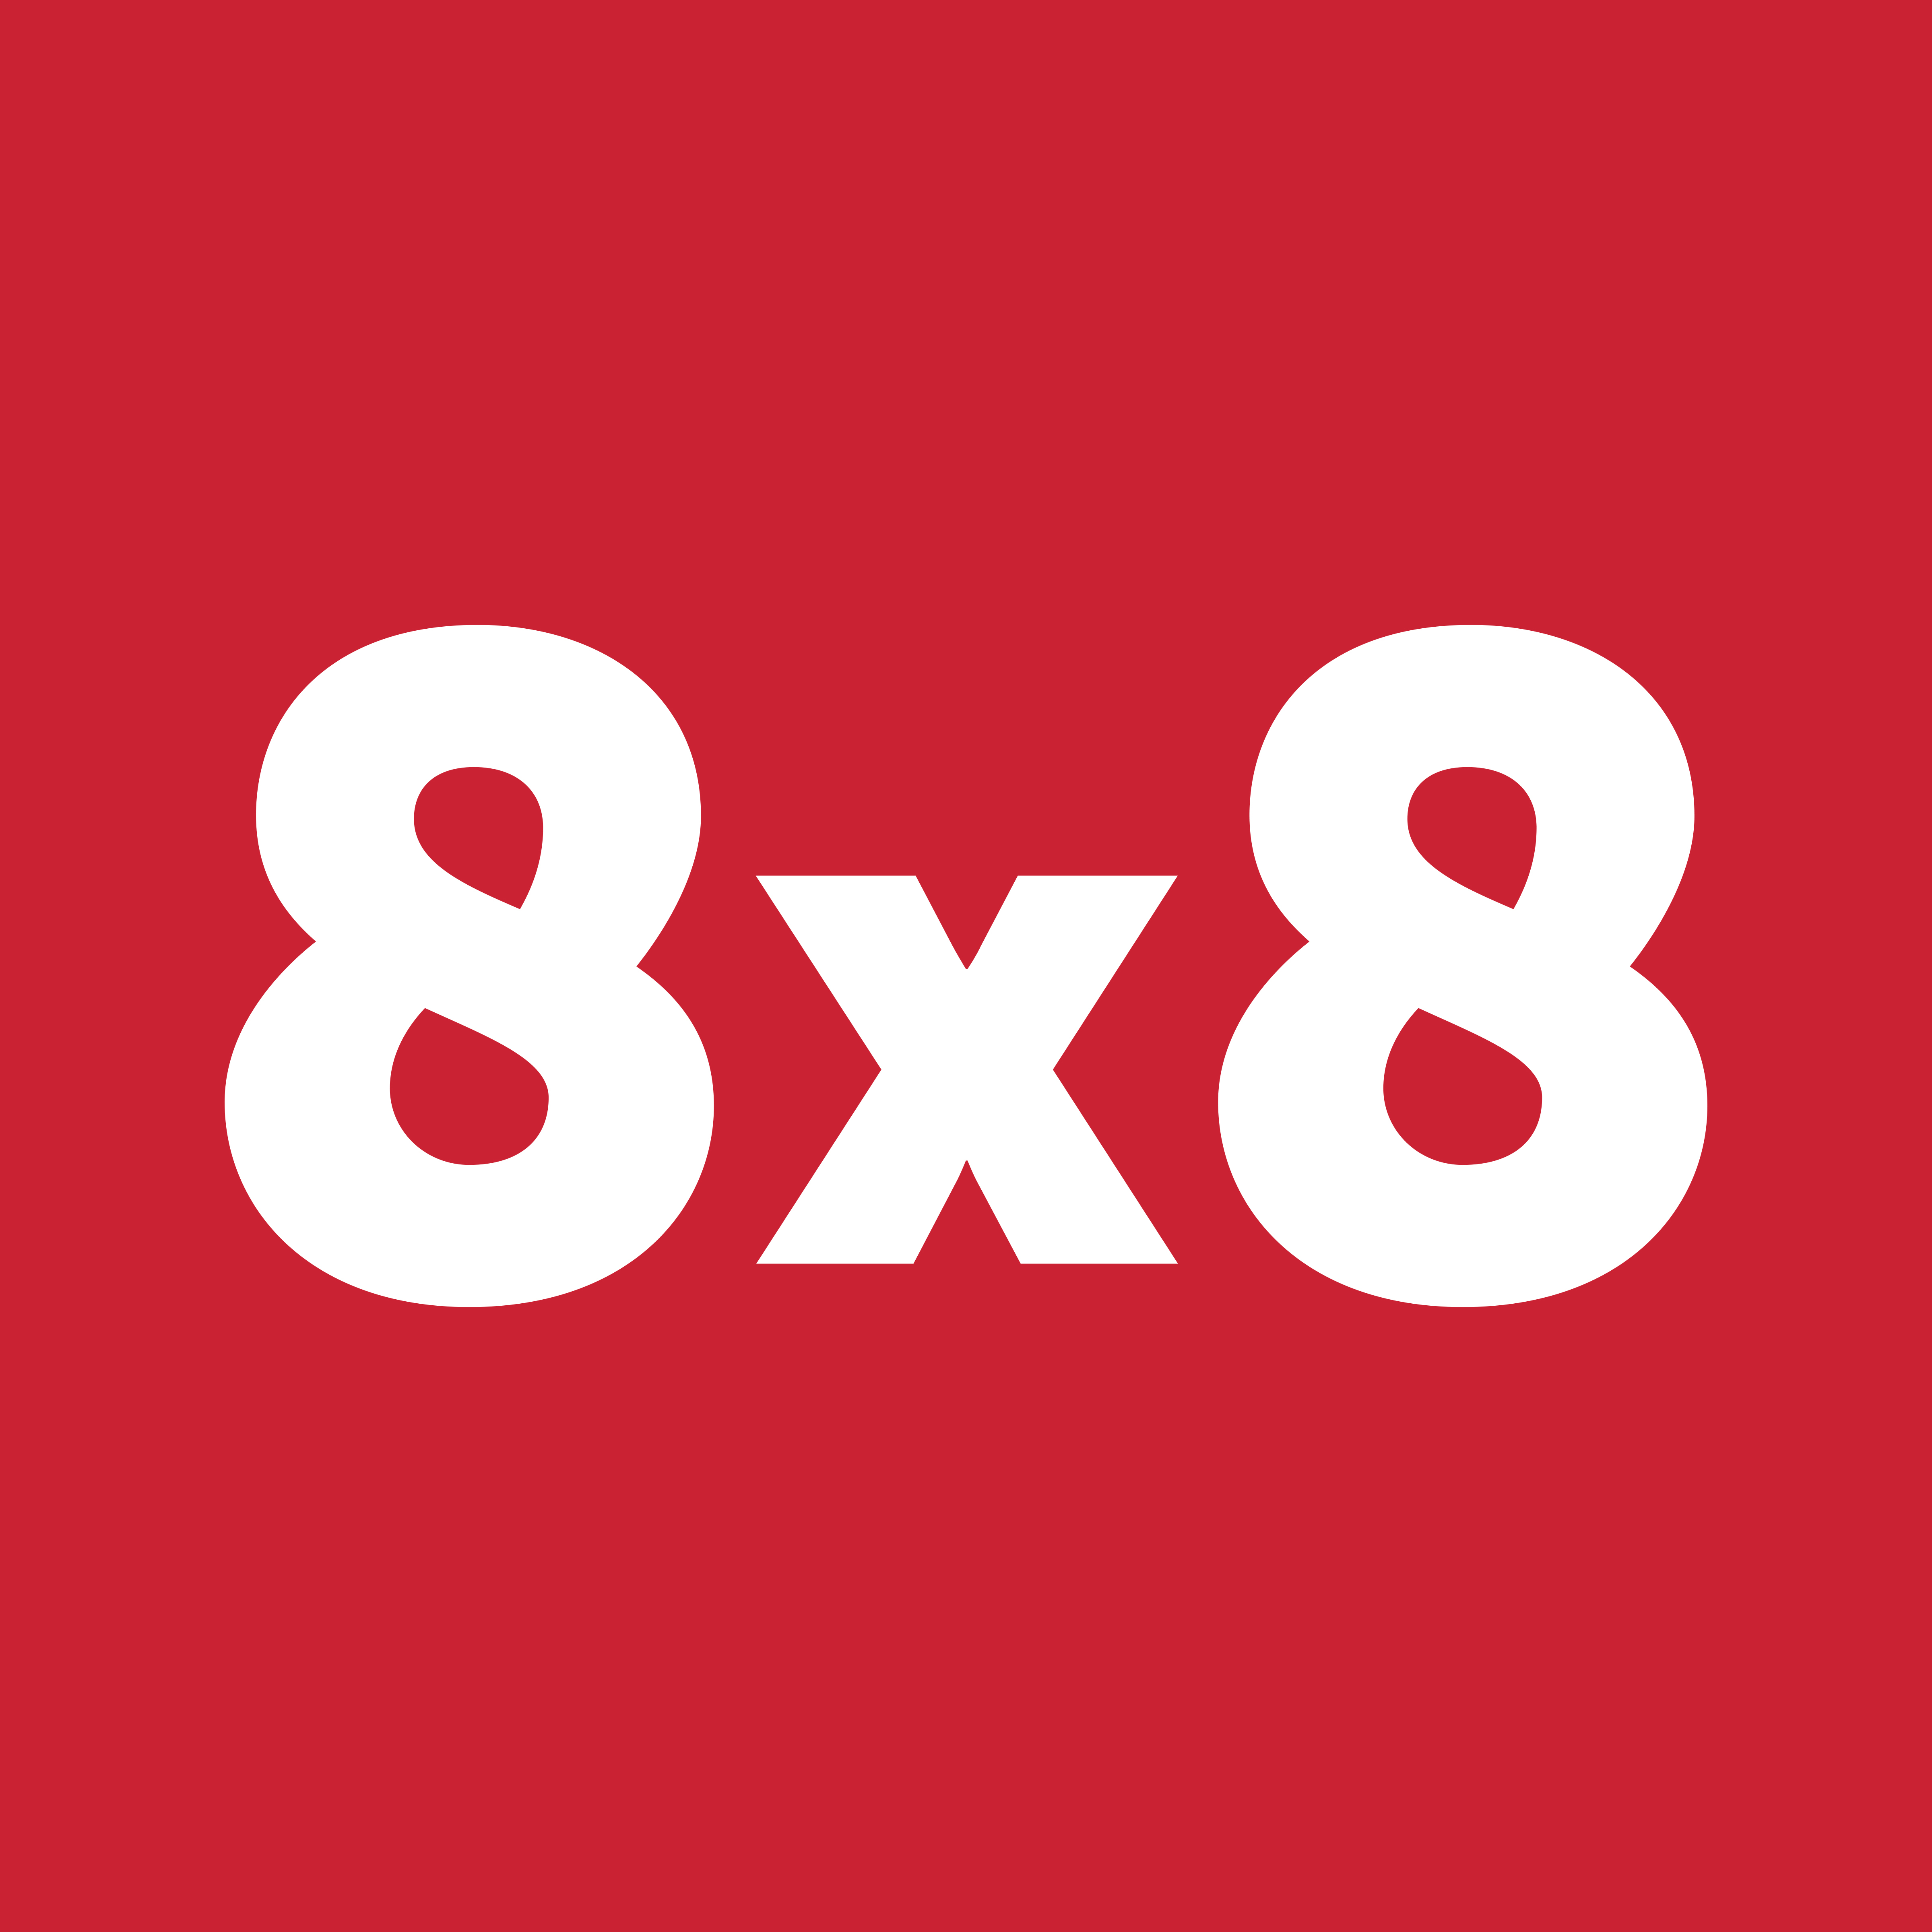 8x8 Primary Logo - 2400x2400RGB_1.jpg